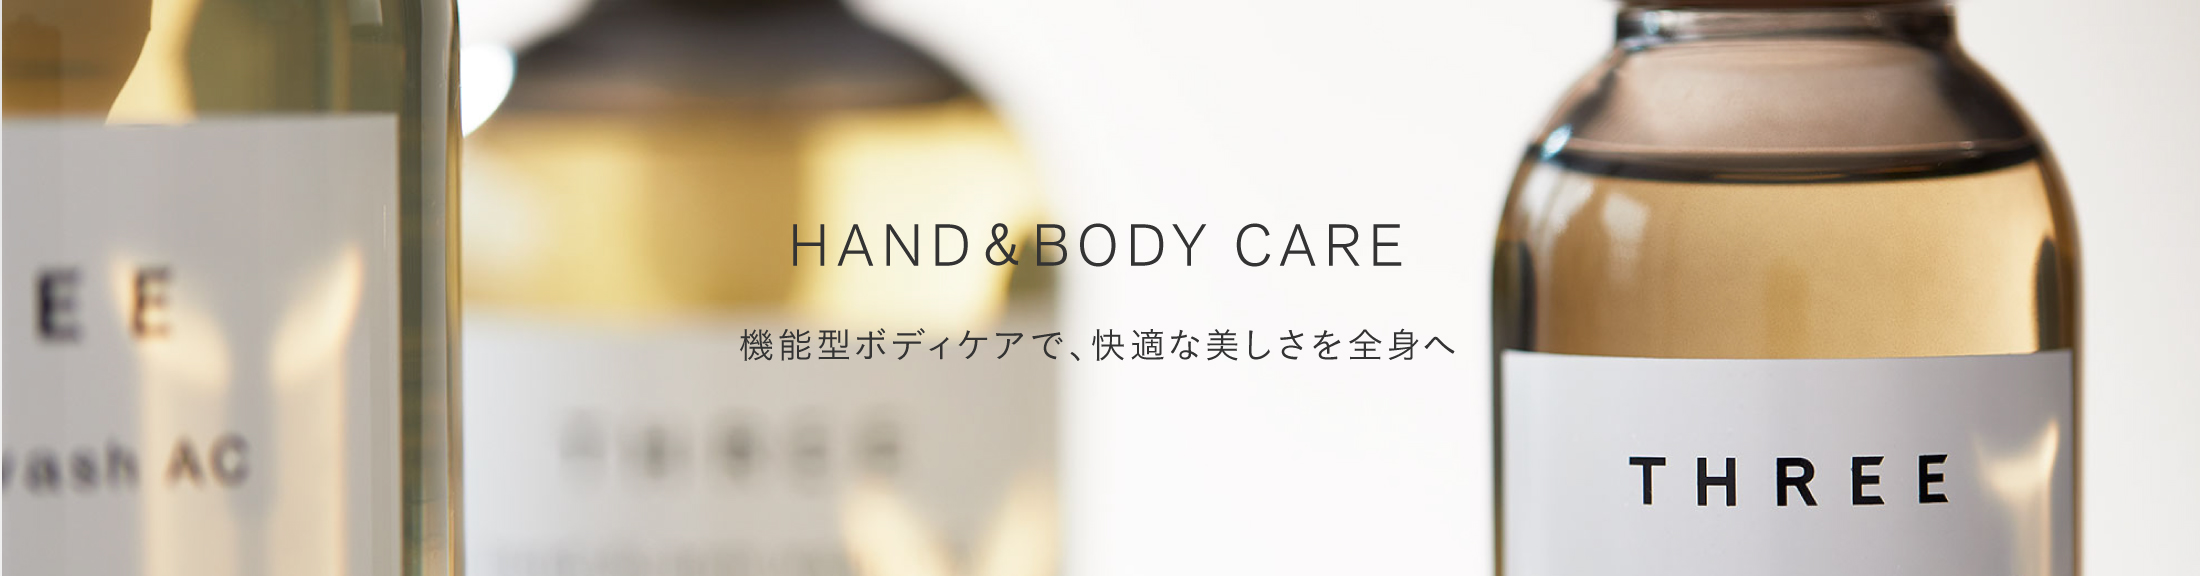 6_hand_body_care